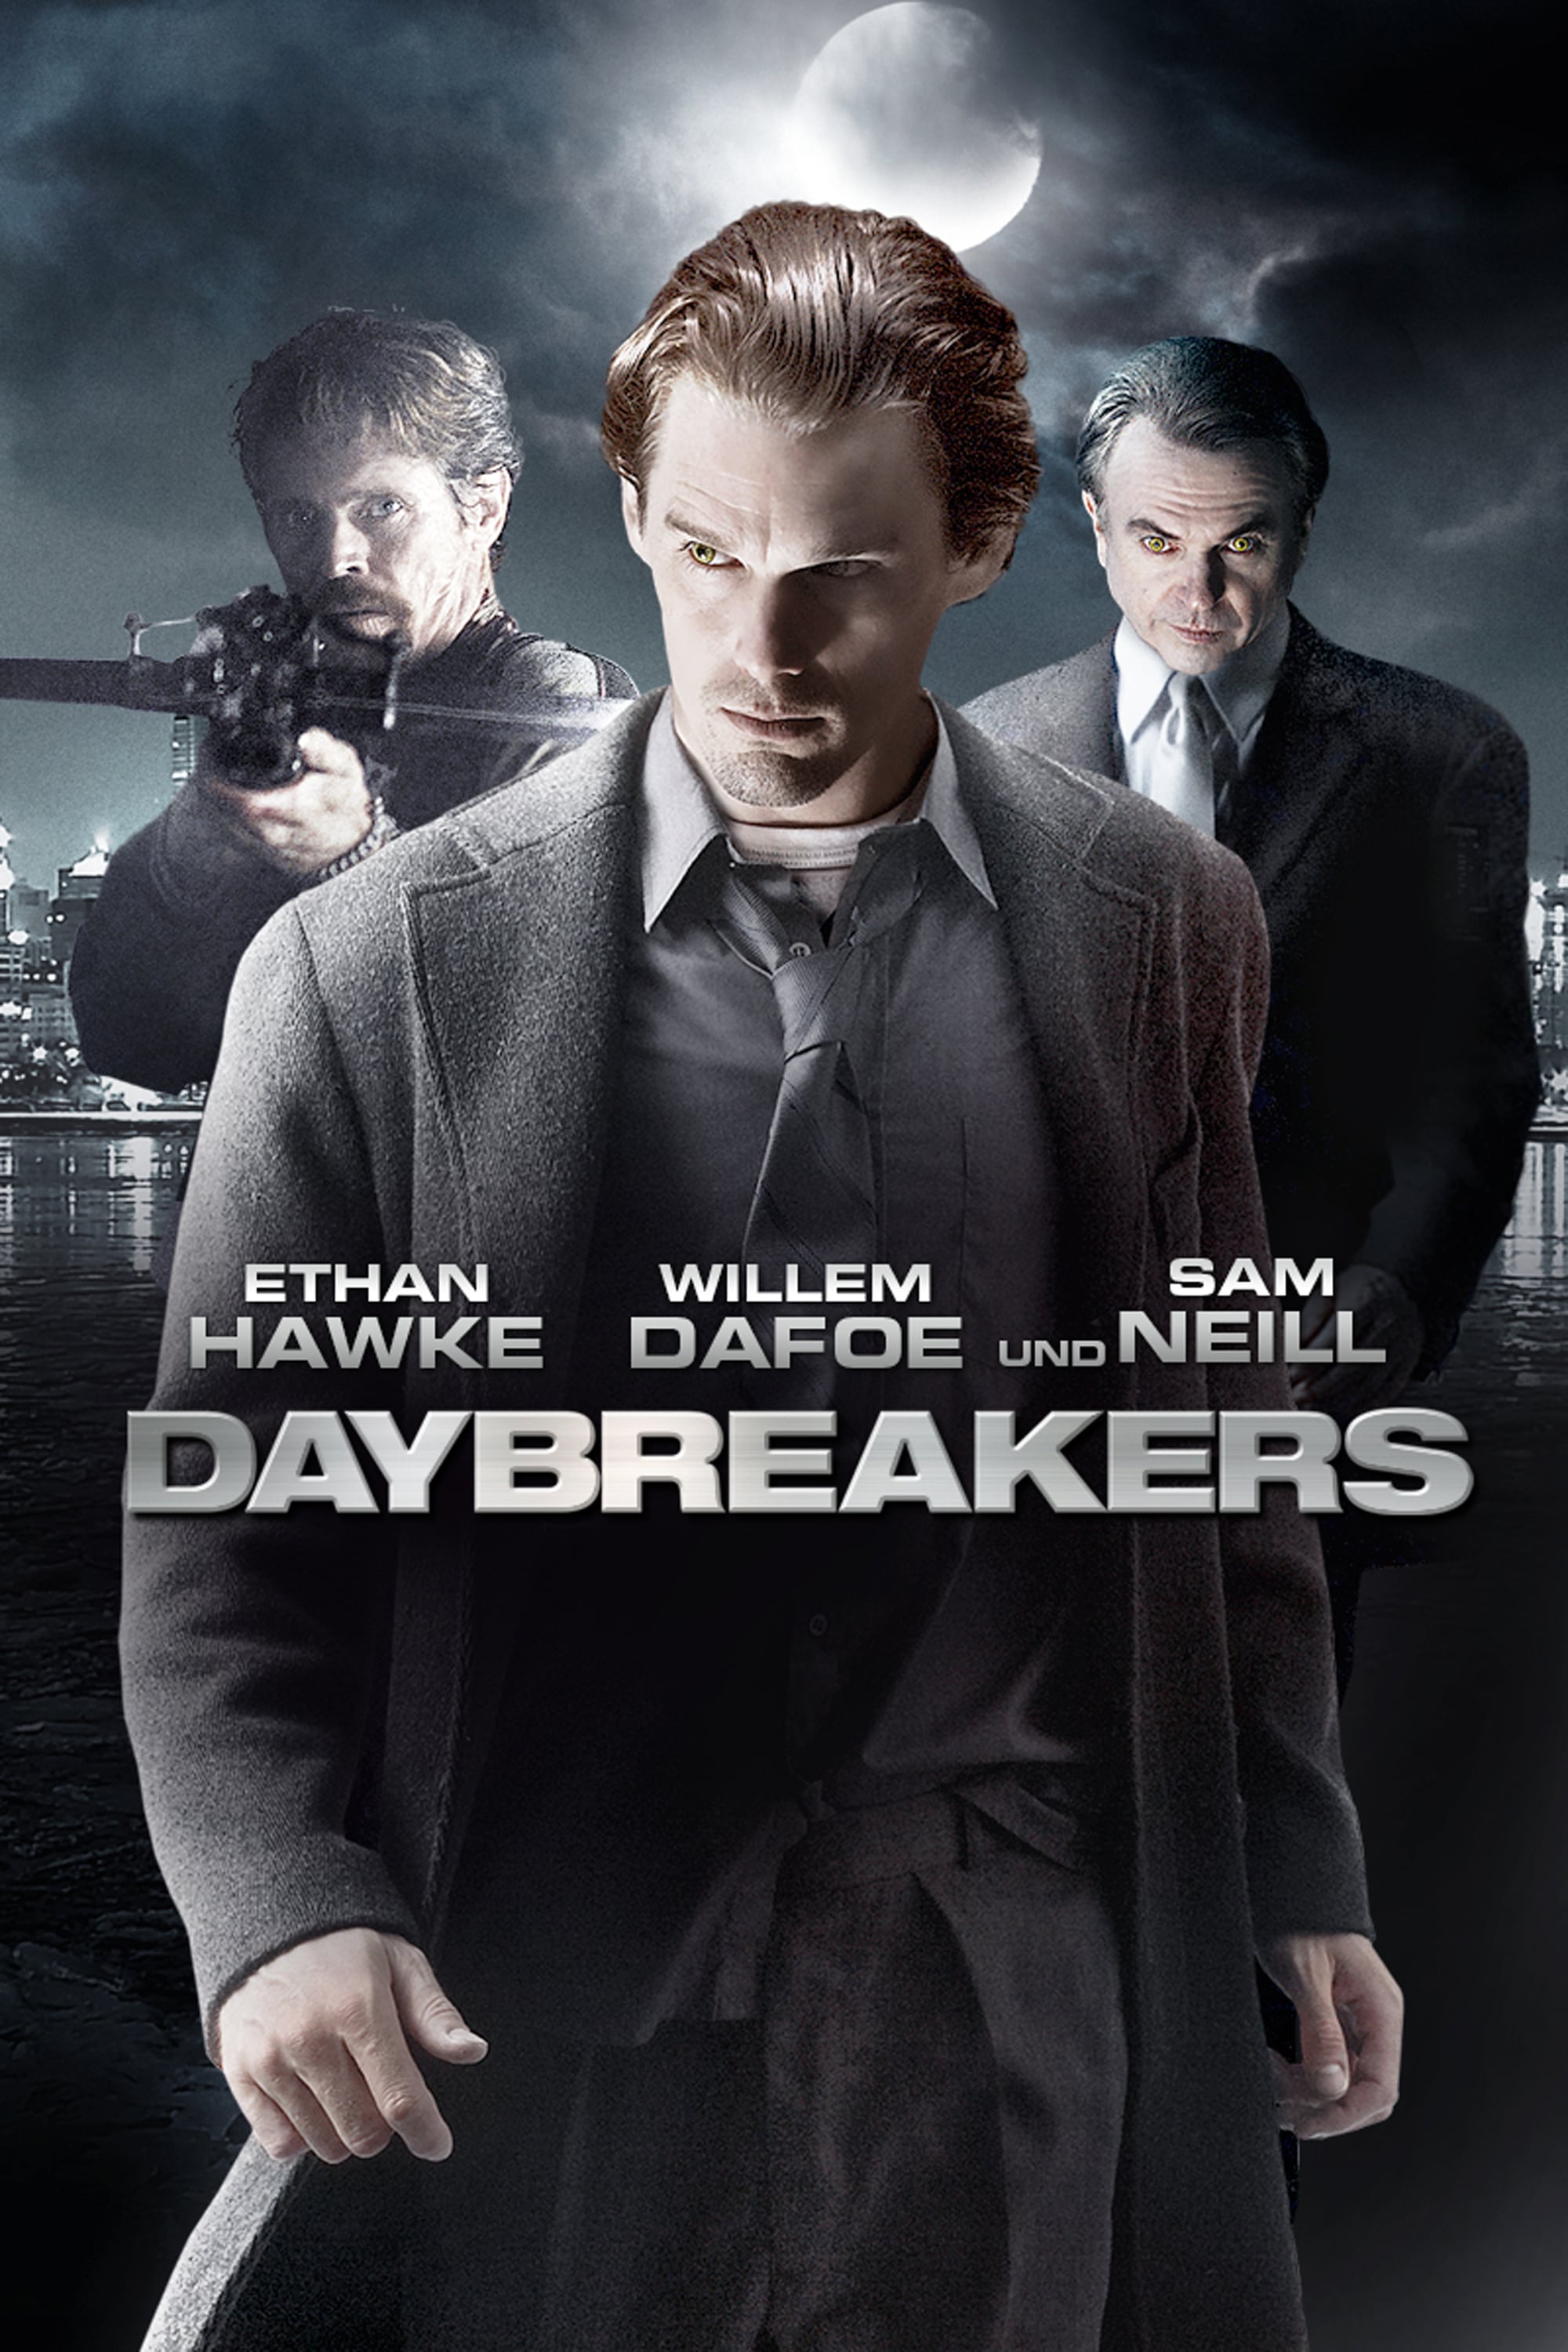 Plakat von "Daybreakers"